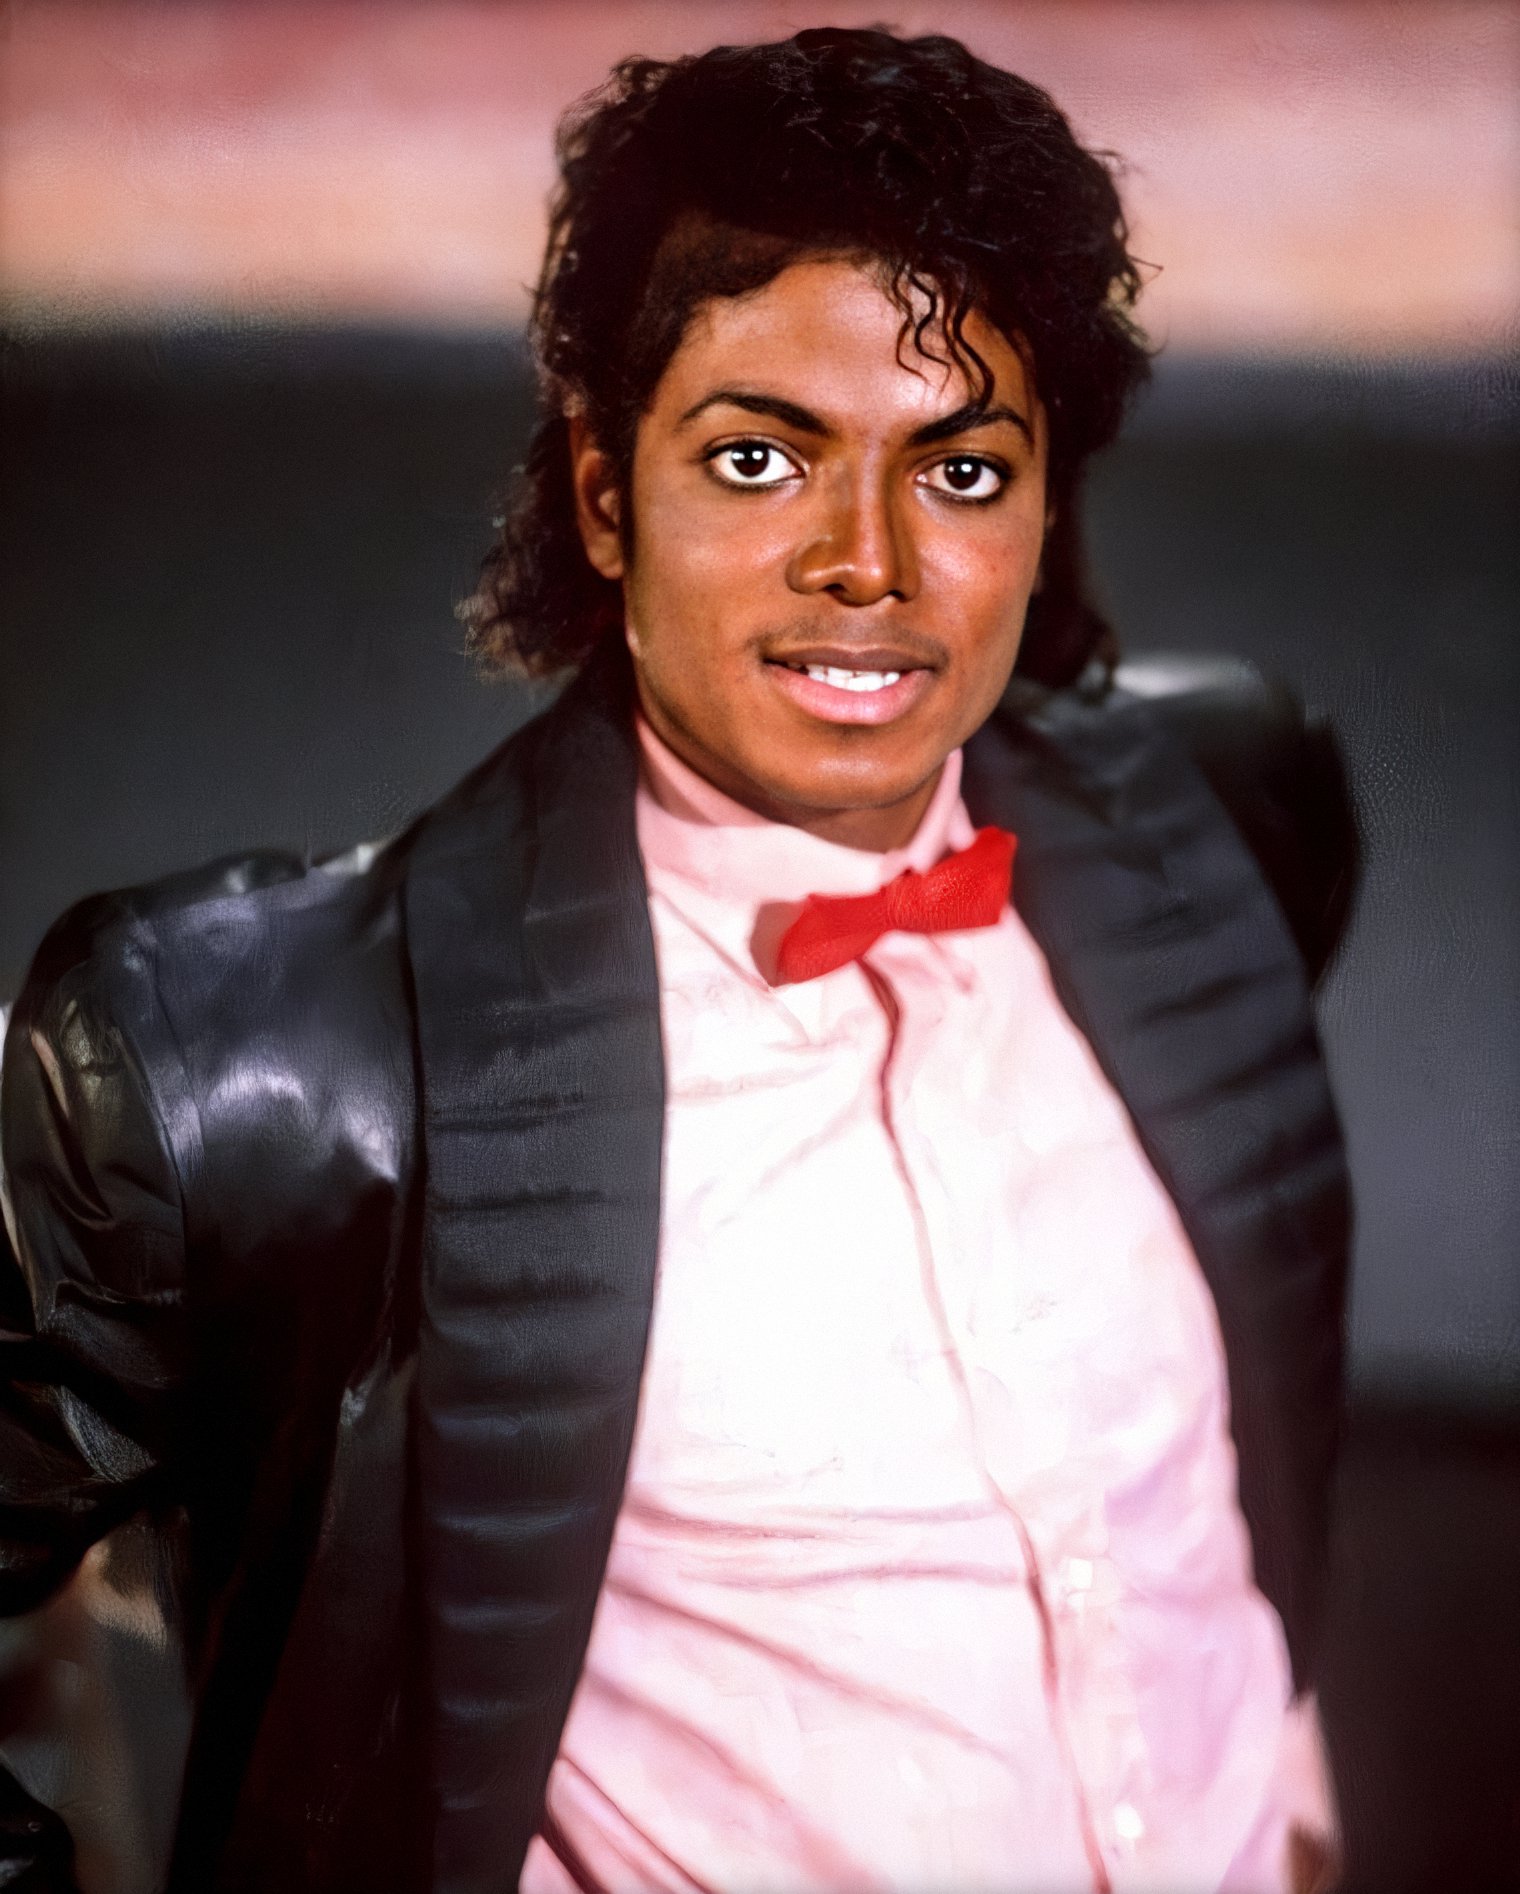 MJJ Photos on Twitter: "Michael Jackson during the video Billie Jean, 1983.  https://t.co/FnfP8GR3xh" / Twitter